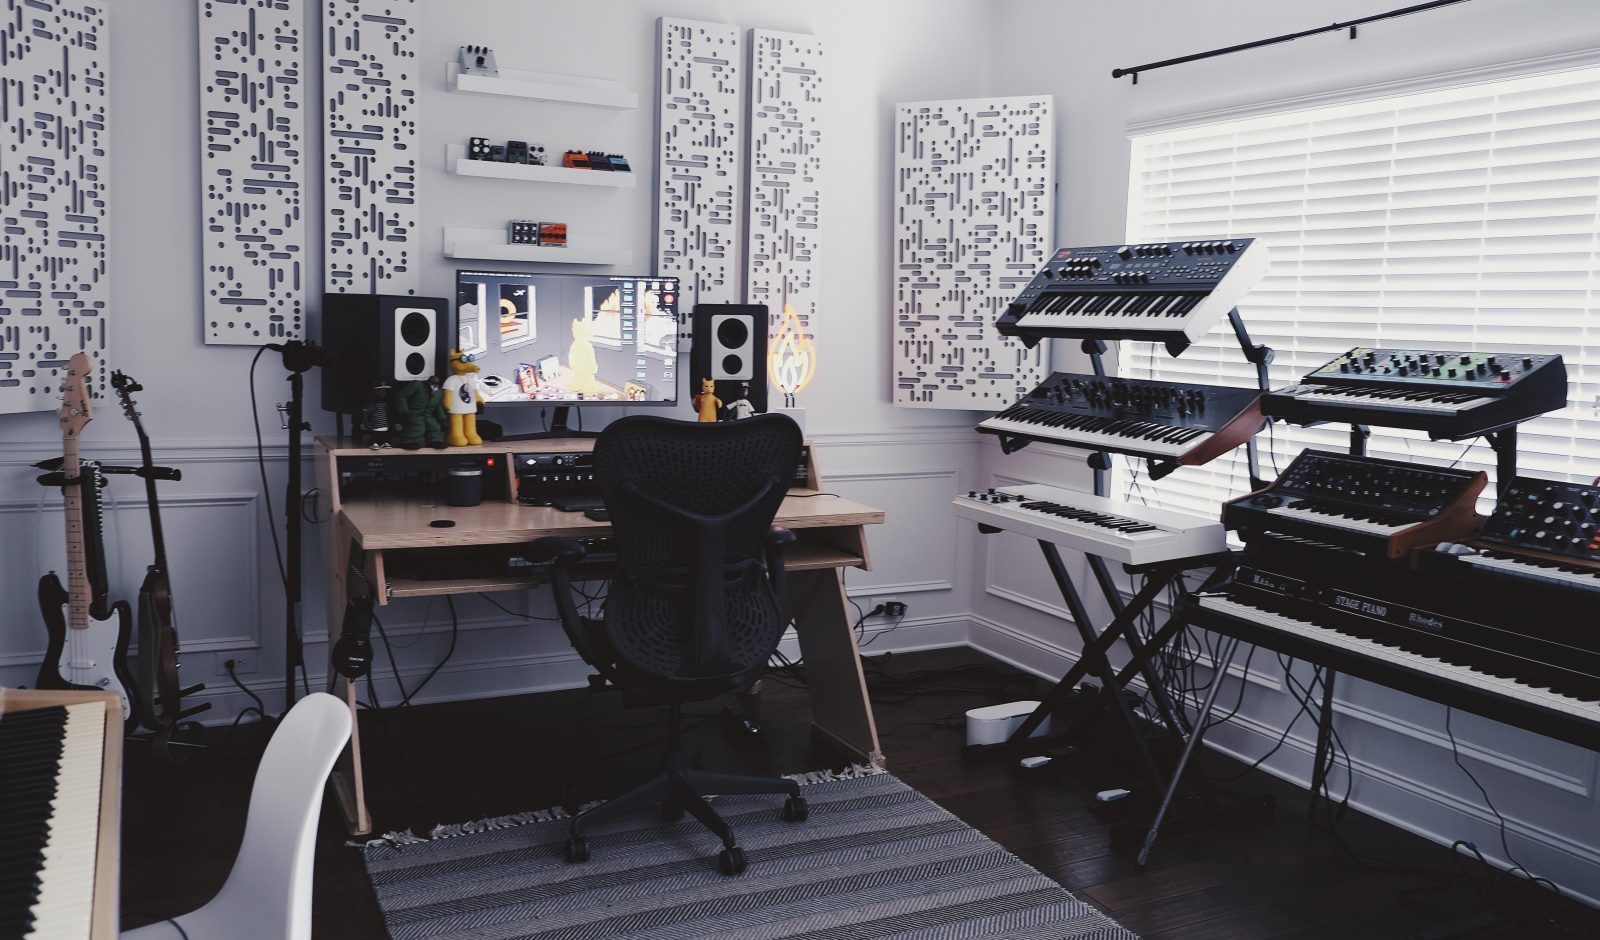 painéis acusticos  Music studio room, Acoustic panels, Music room